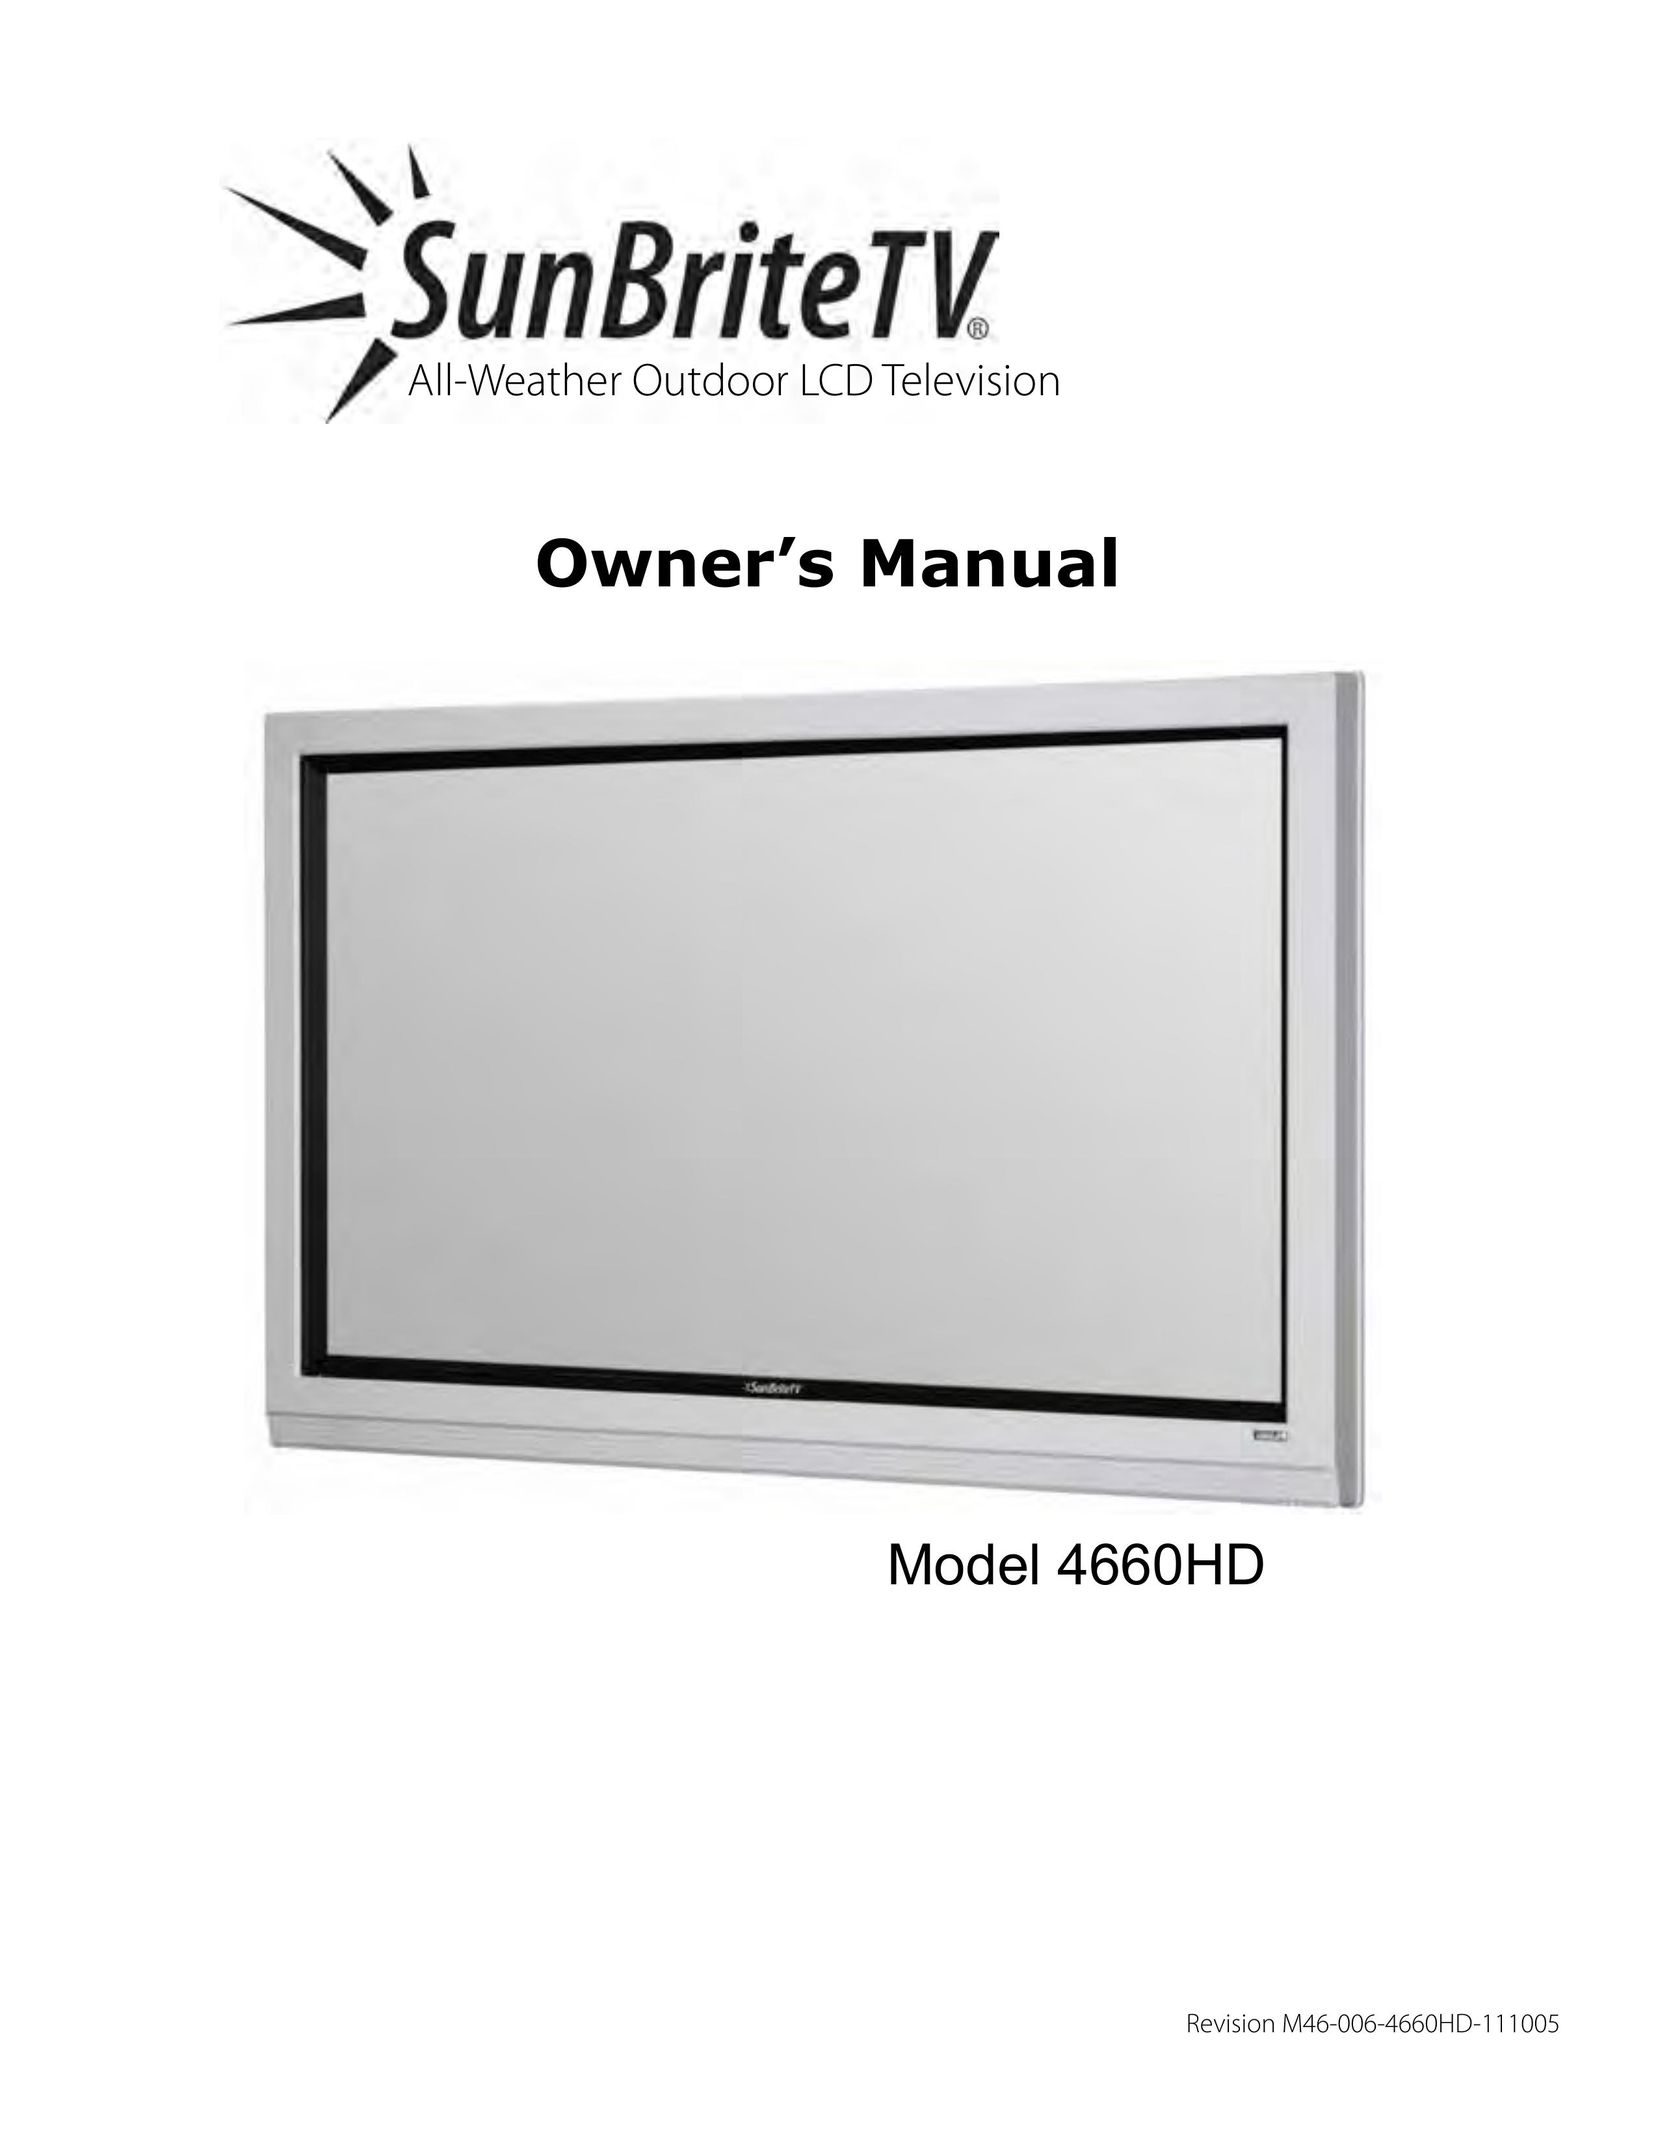 SunBriteTV SB-4660HD-BL Flat Panel Television User Manual